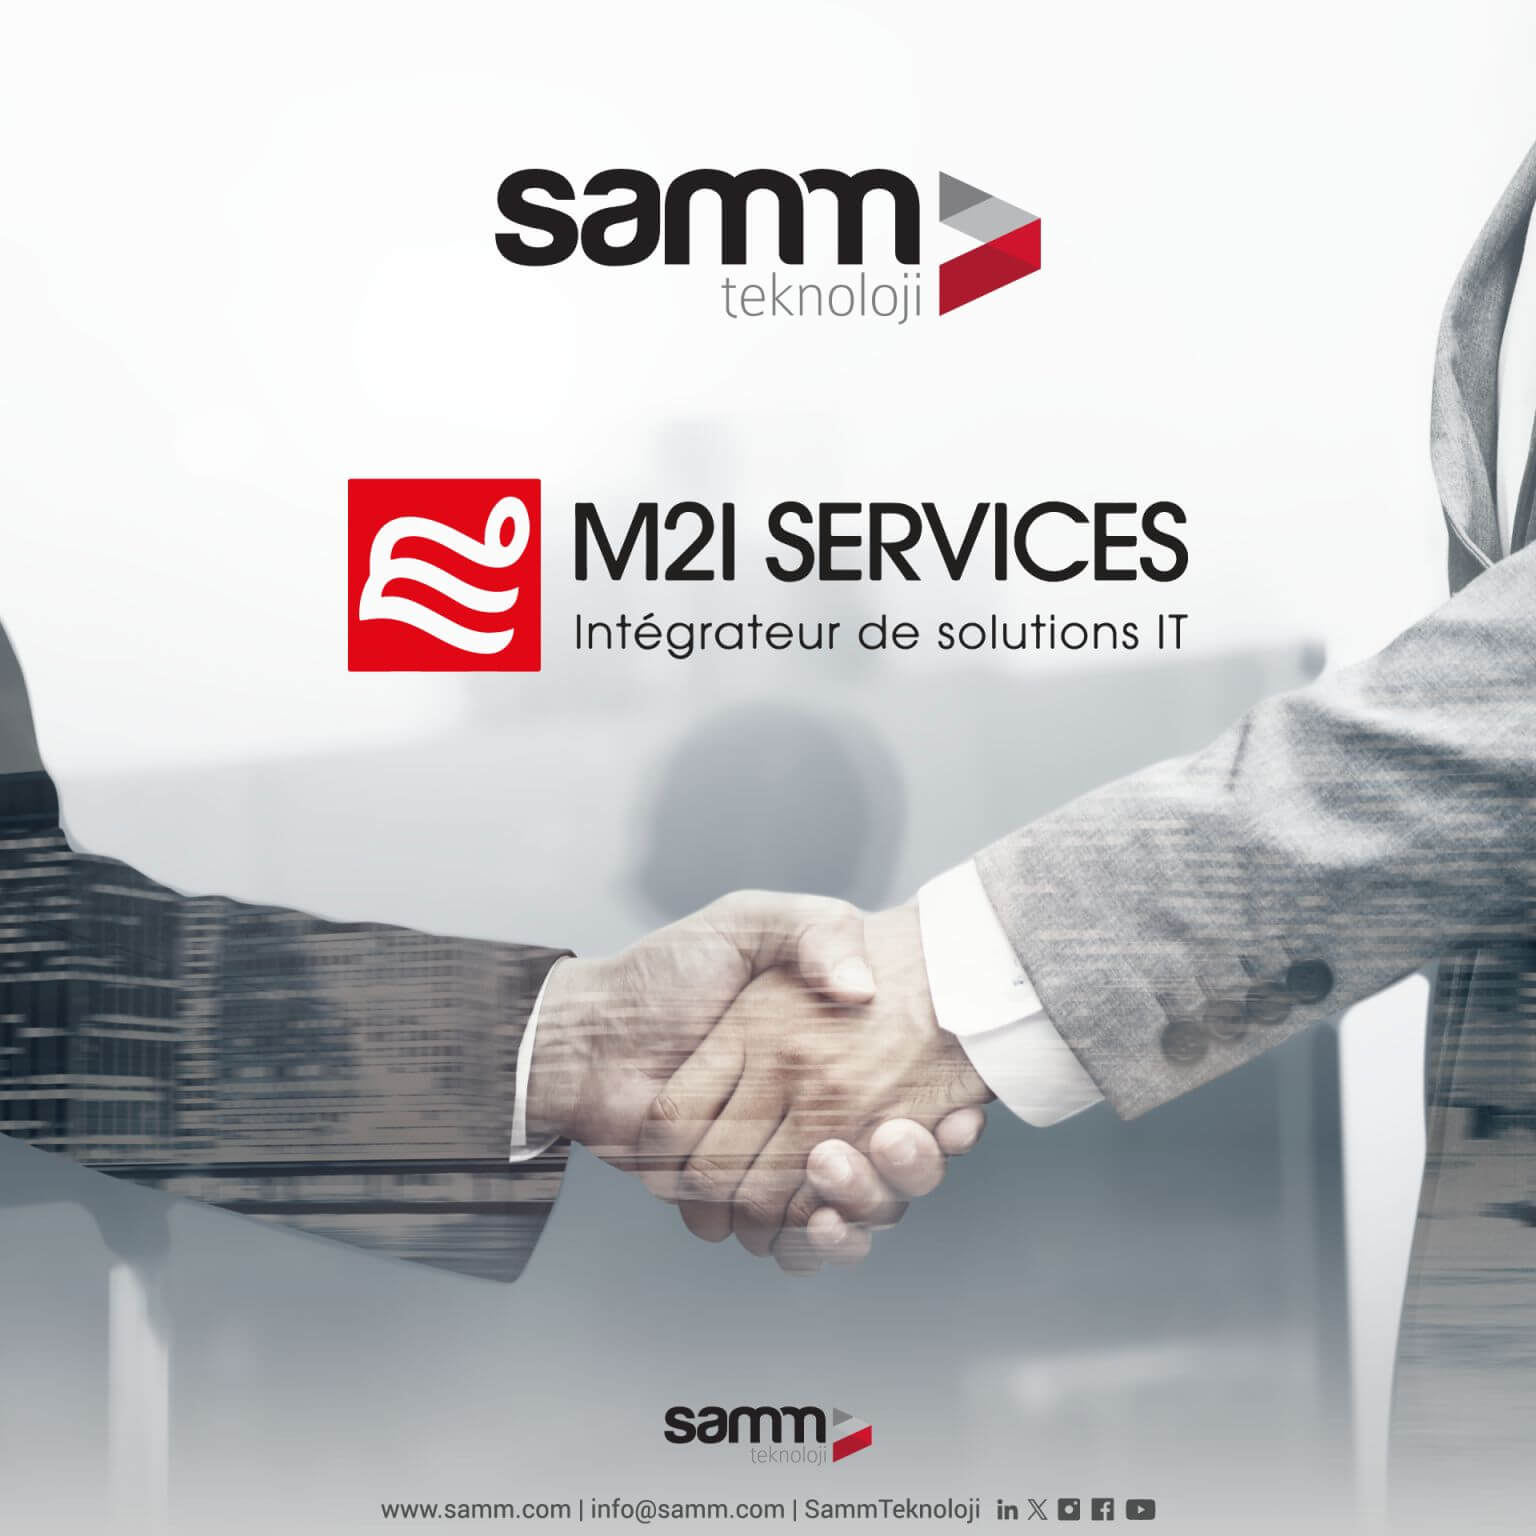 M2I Services ile Samm Teknoloji İş Ortaklığı